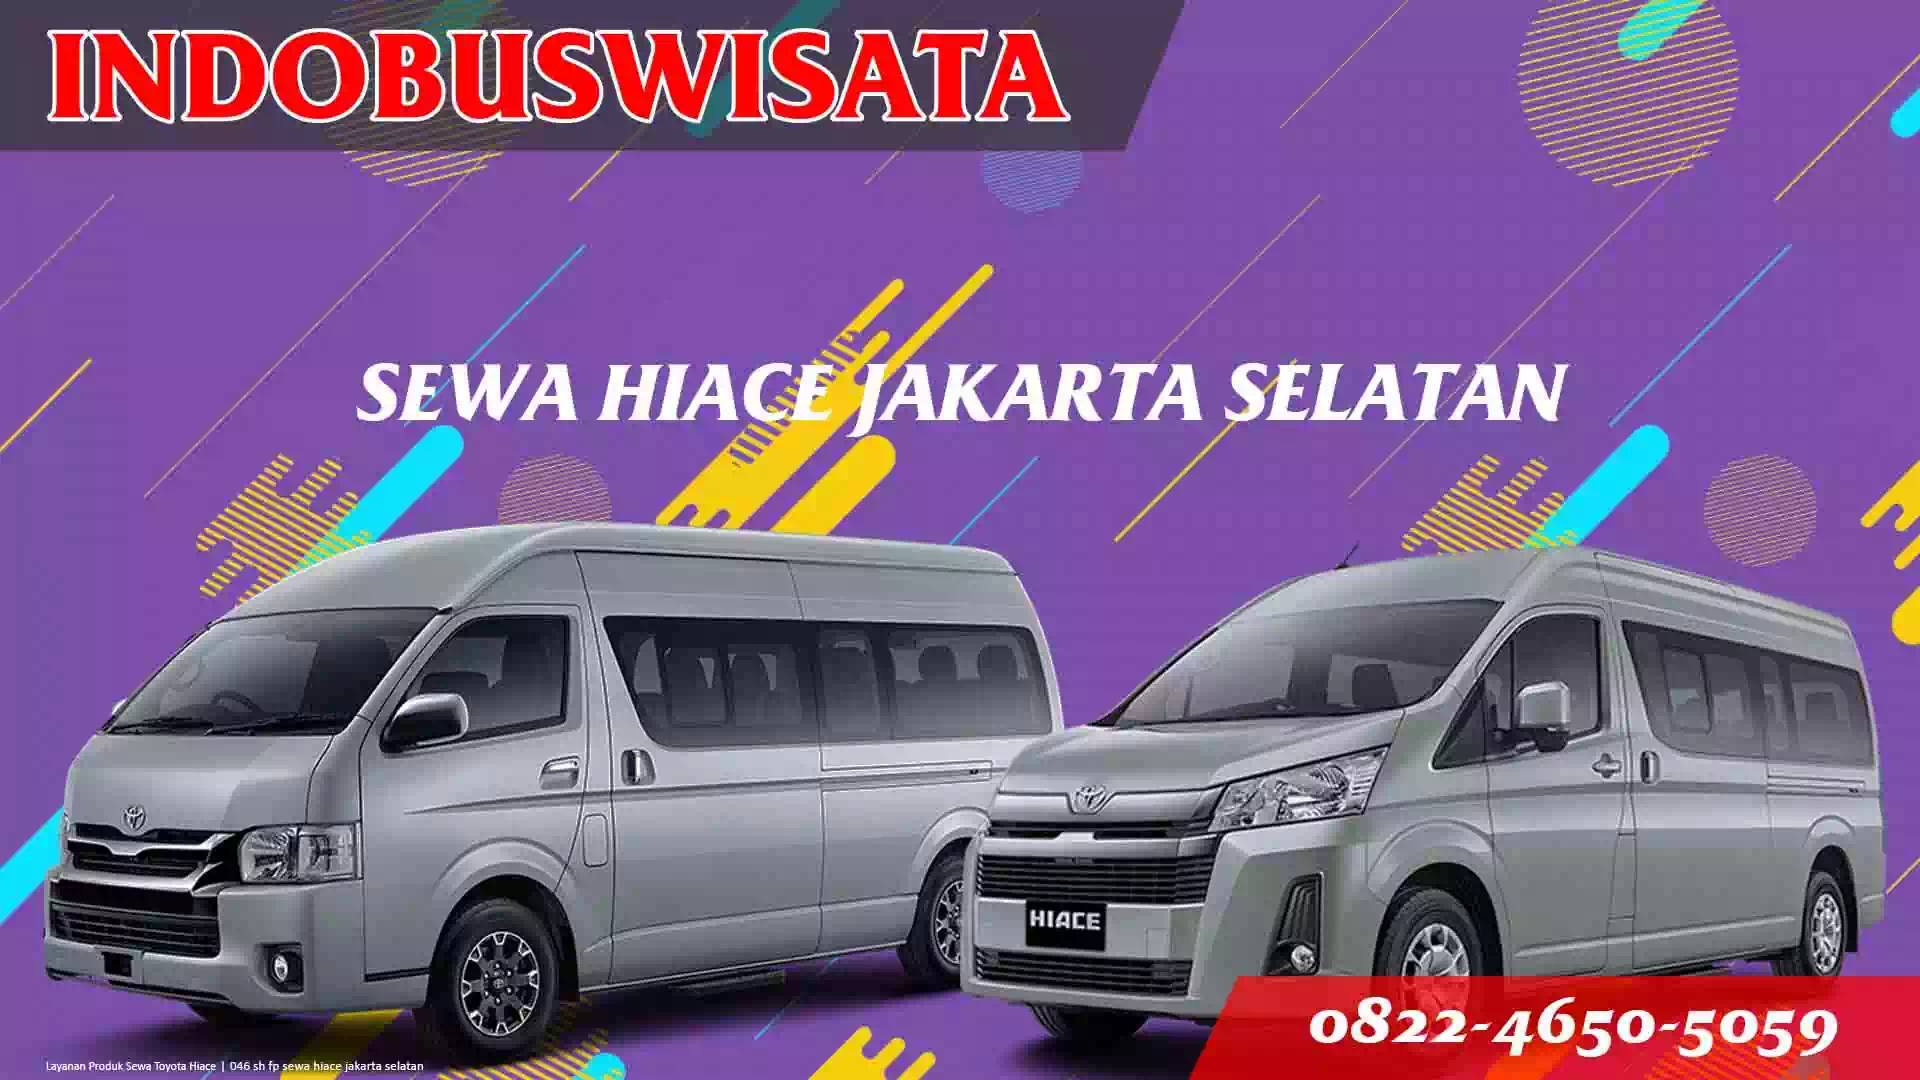 046 Sh Fp Sewa Hiace Jakarta Selatan Indobuswisata